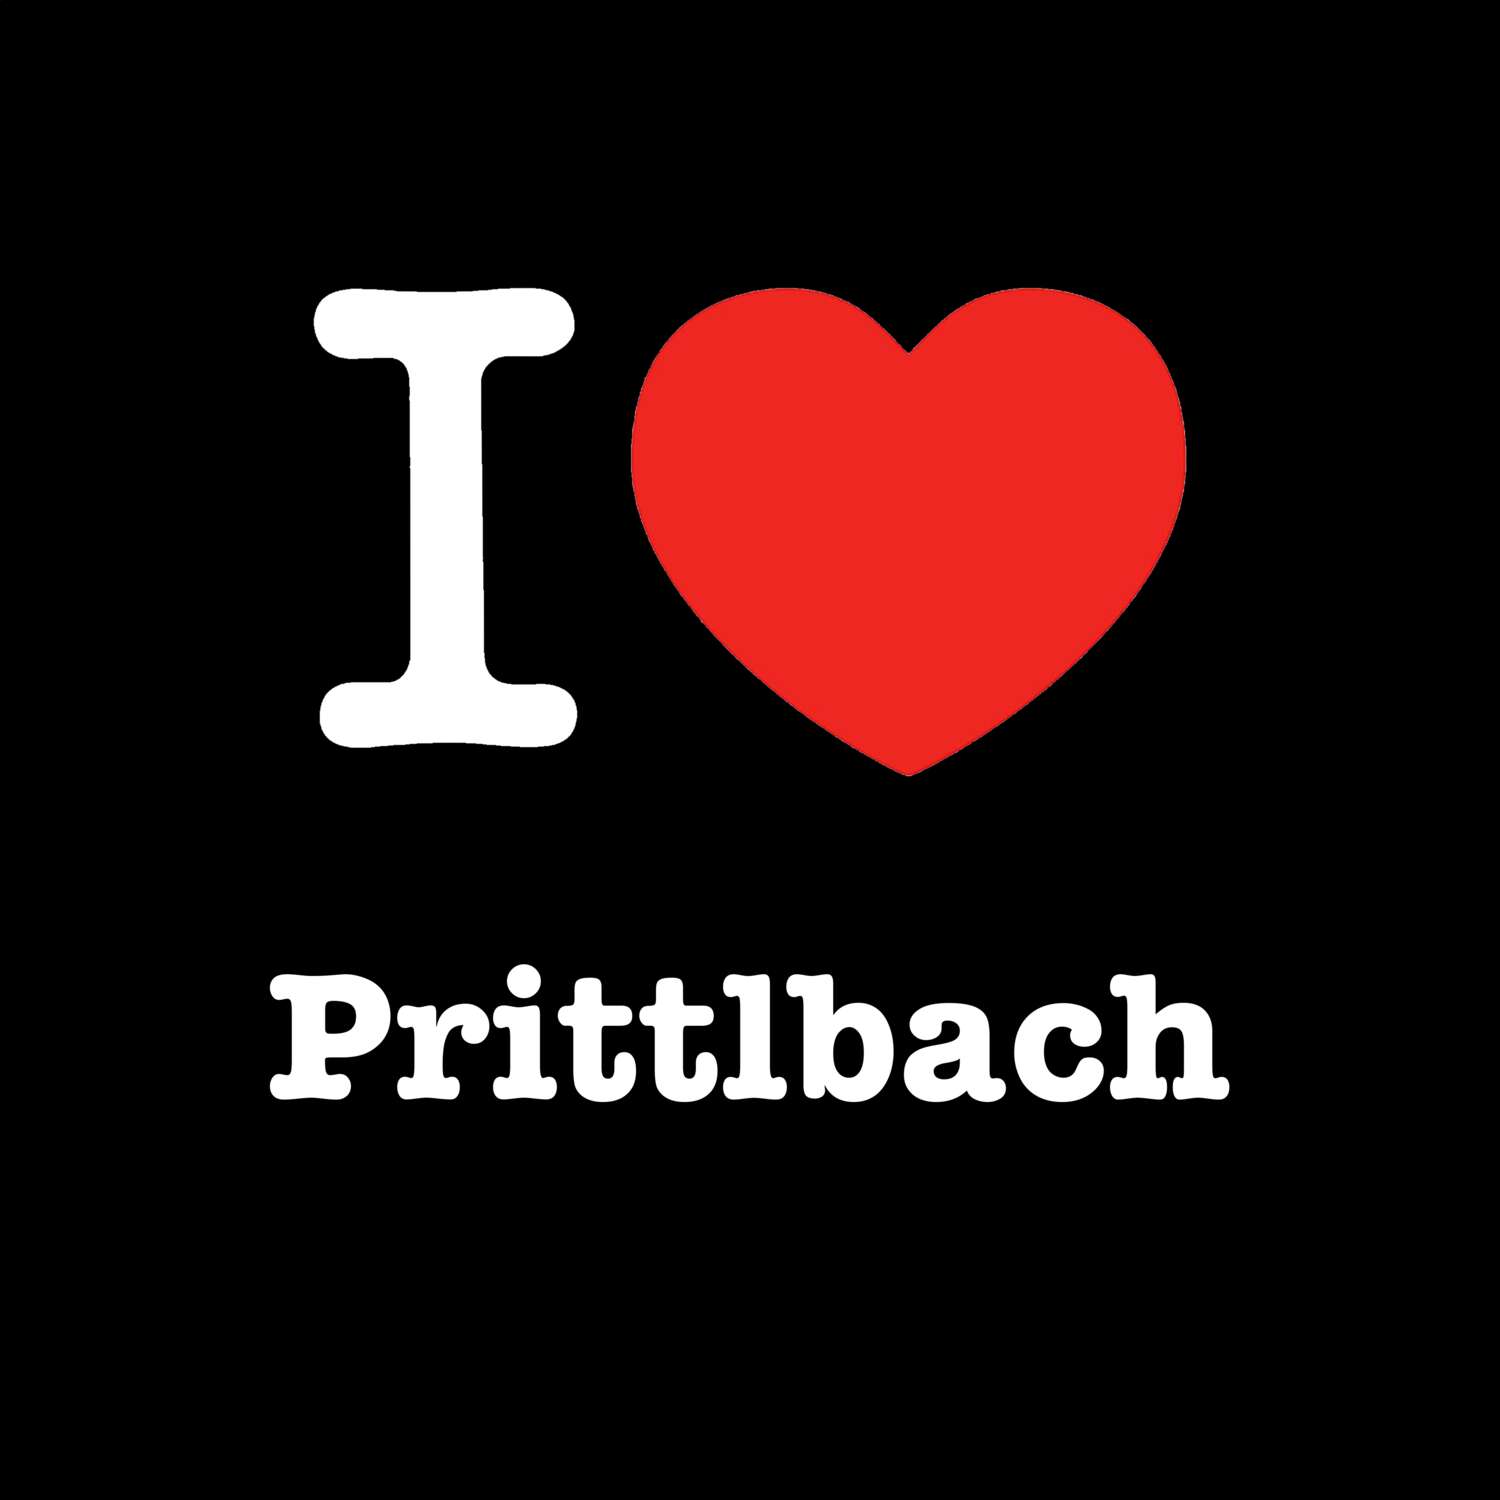 Prittlbach T-Shirt »I love«